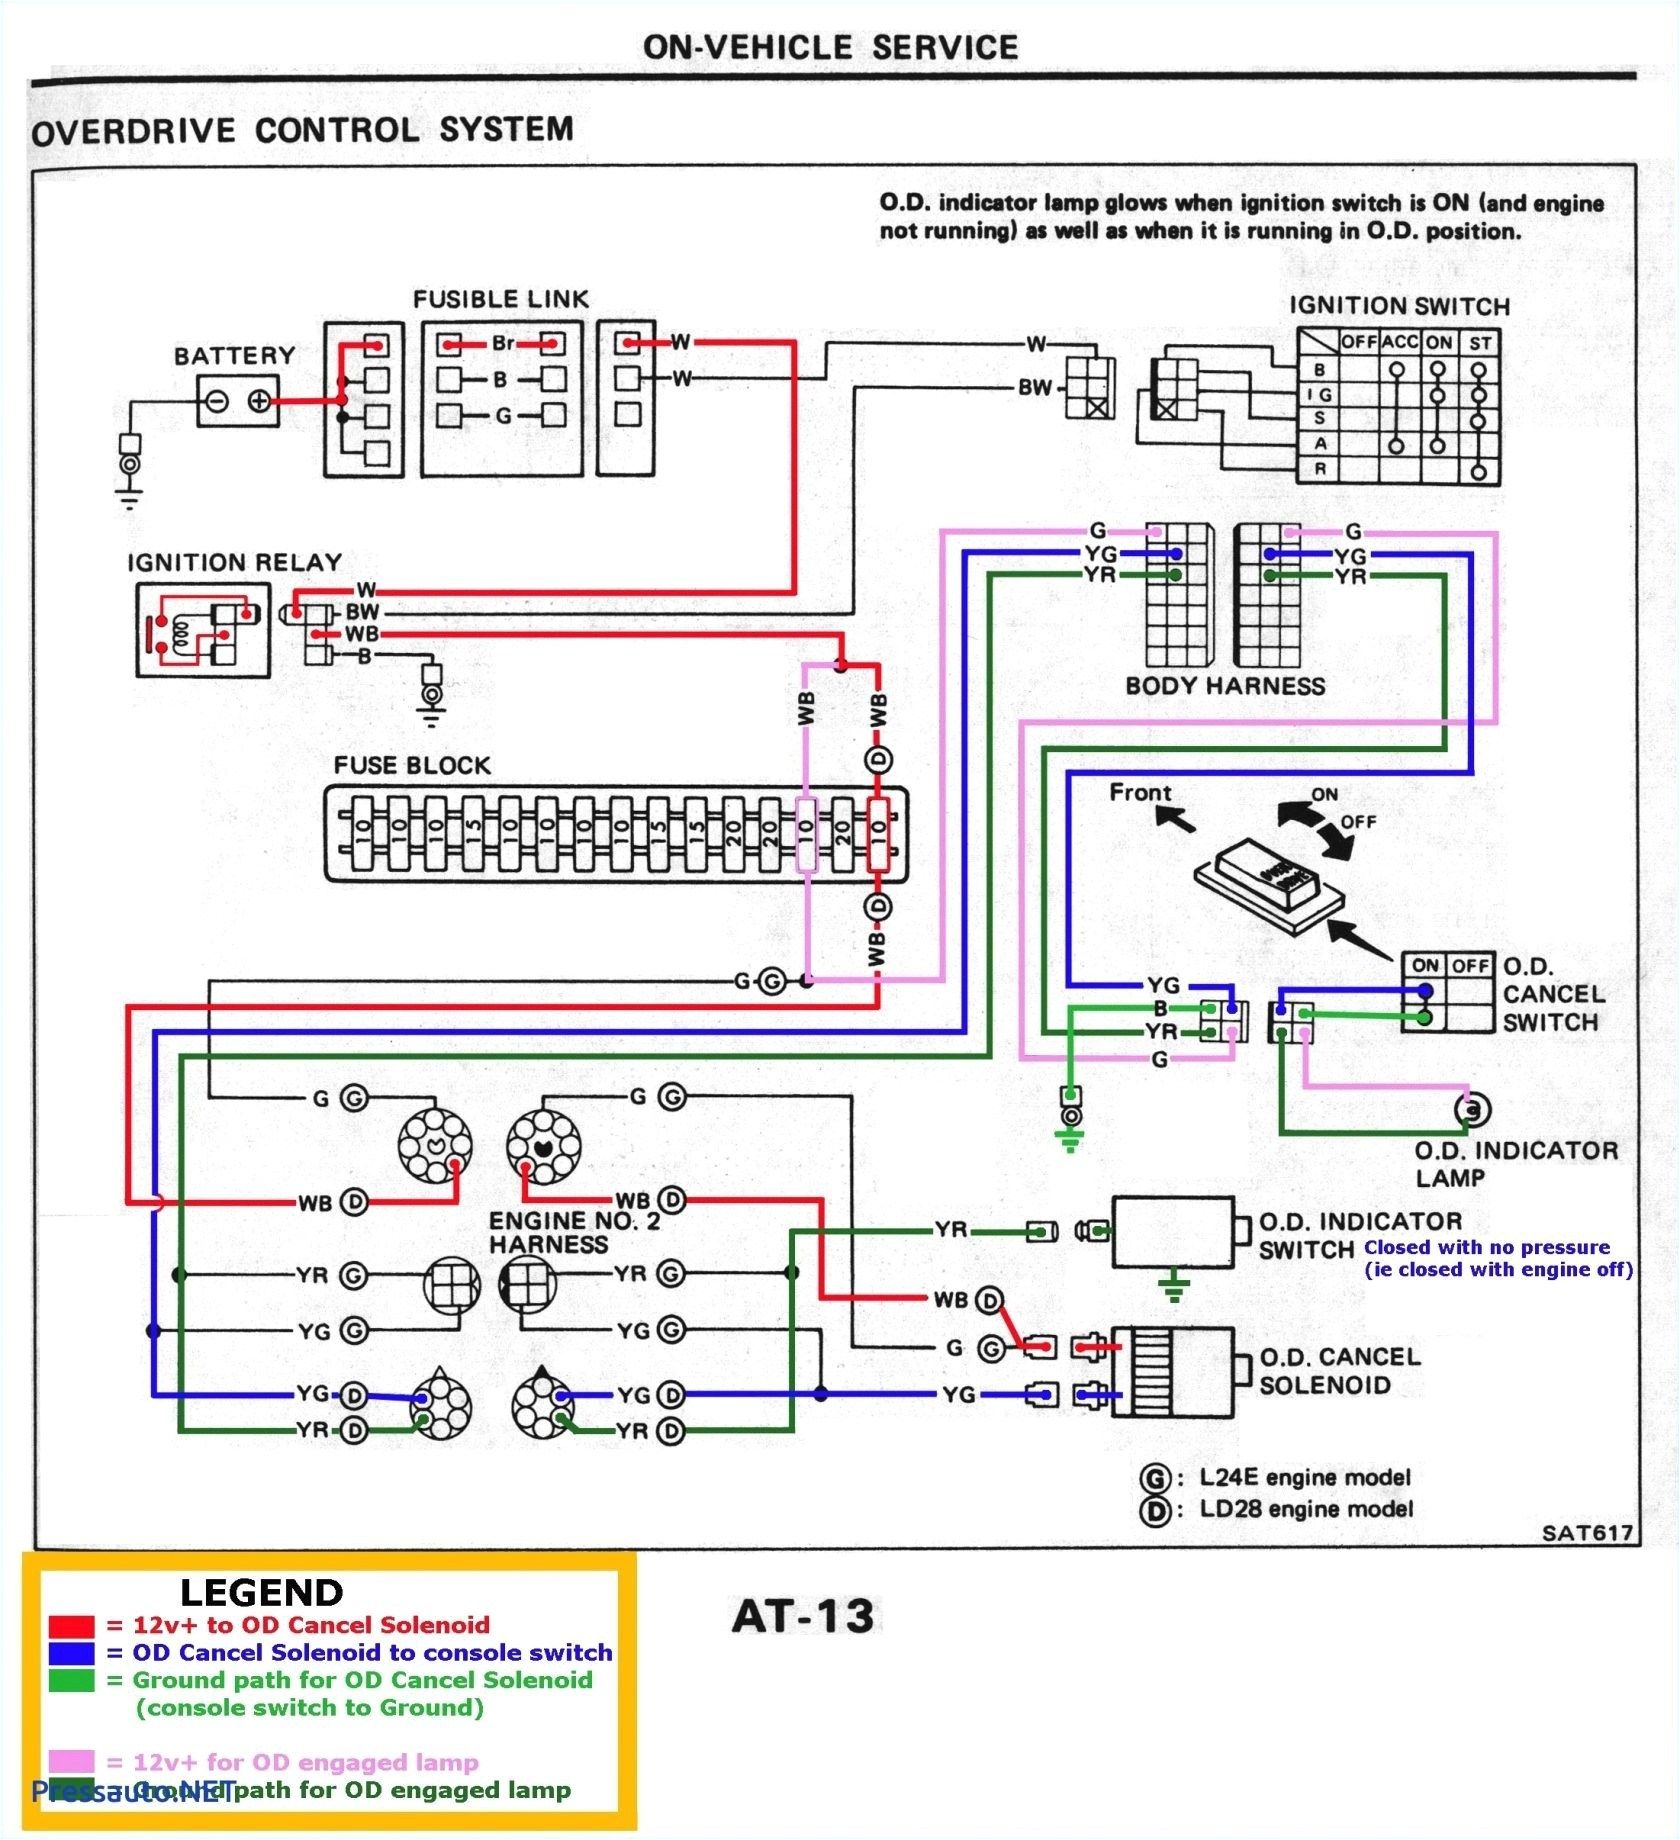 john deere 318 diagram new om 0281 murray riding lawn mower wiring diagram free diagram of john deere 318 diagram jpg